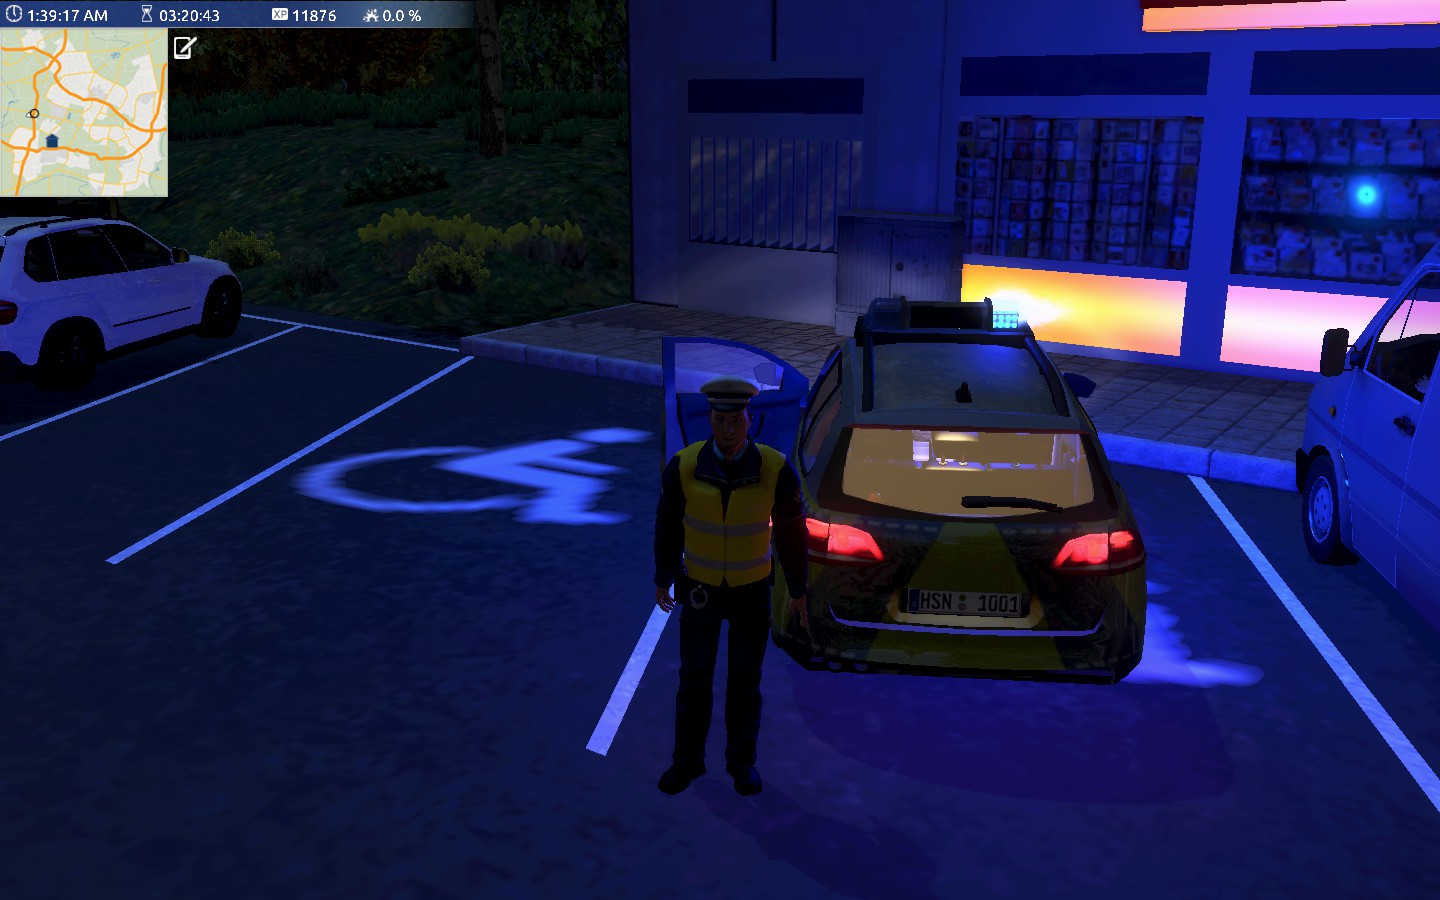 autobahn police simulator steam